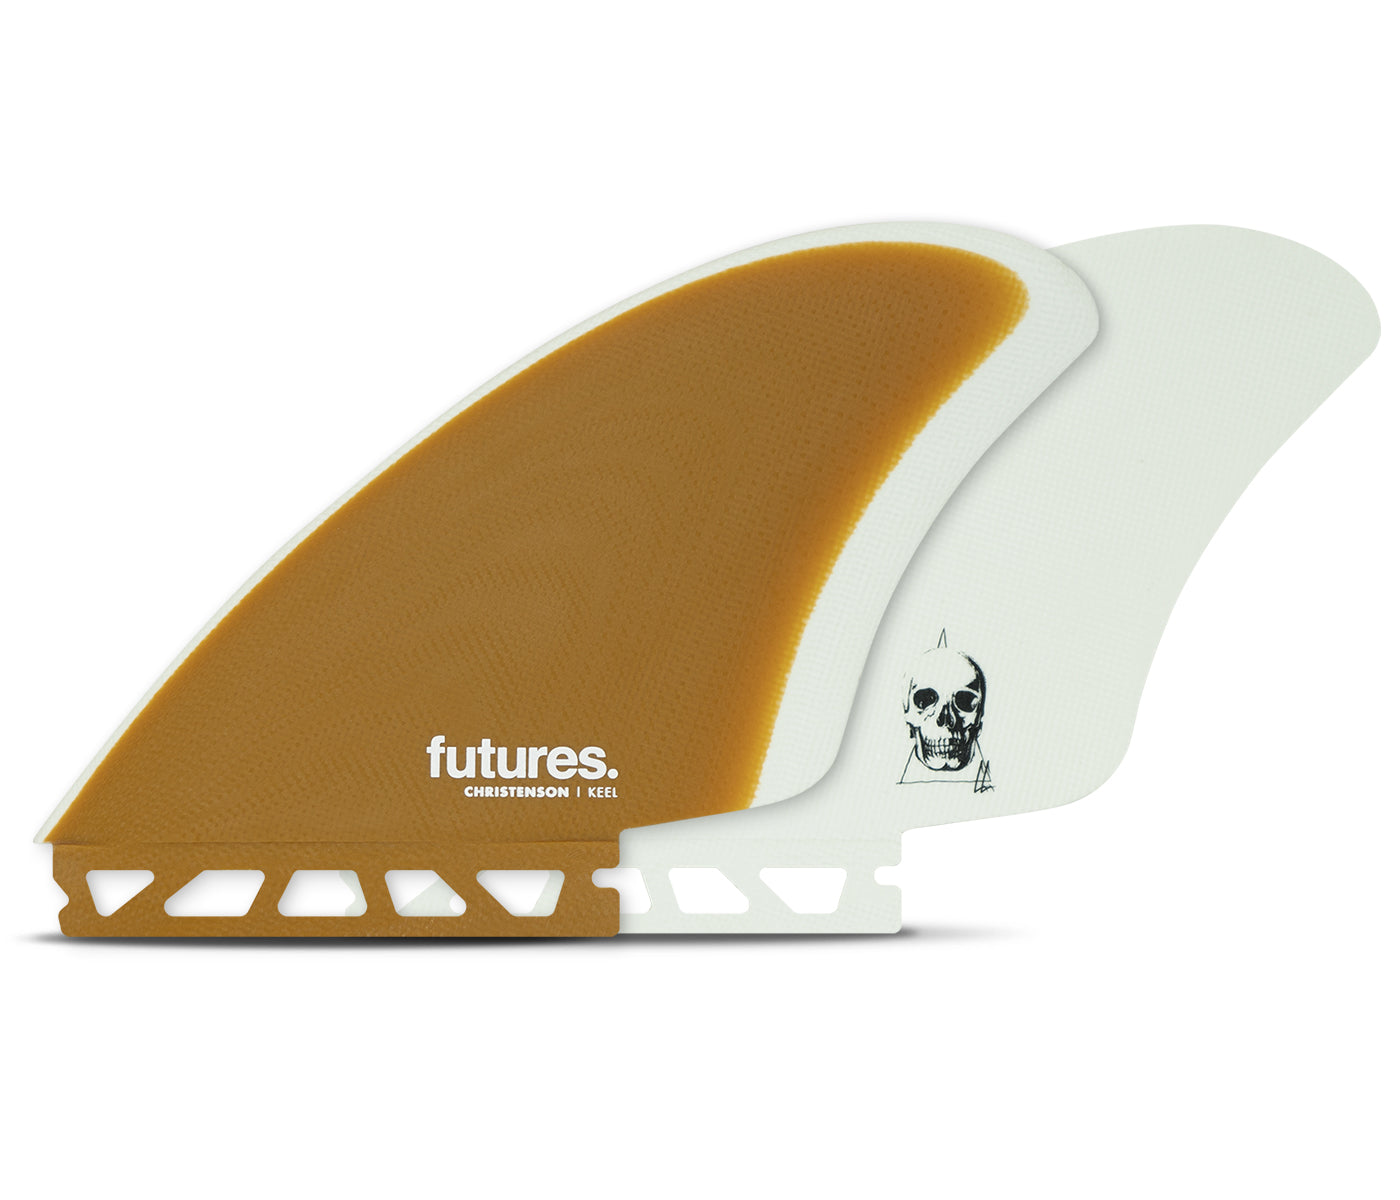 FUTURES // CHRISTENSON KEEL - Board Store FuturesFins  